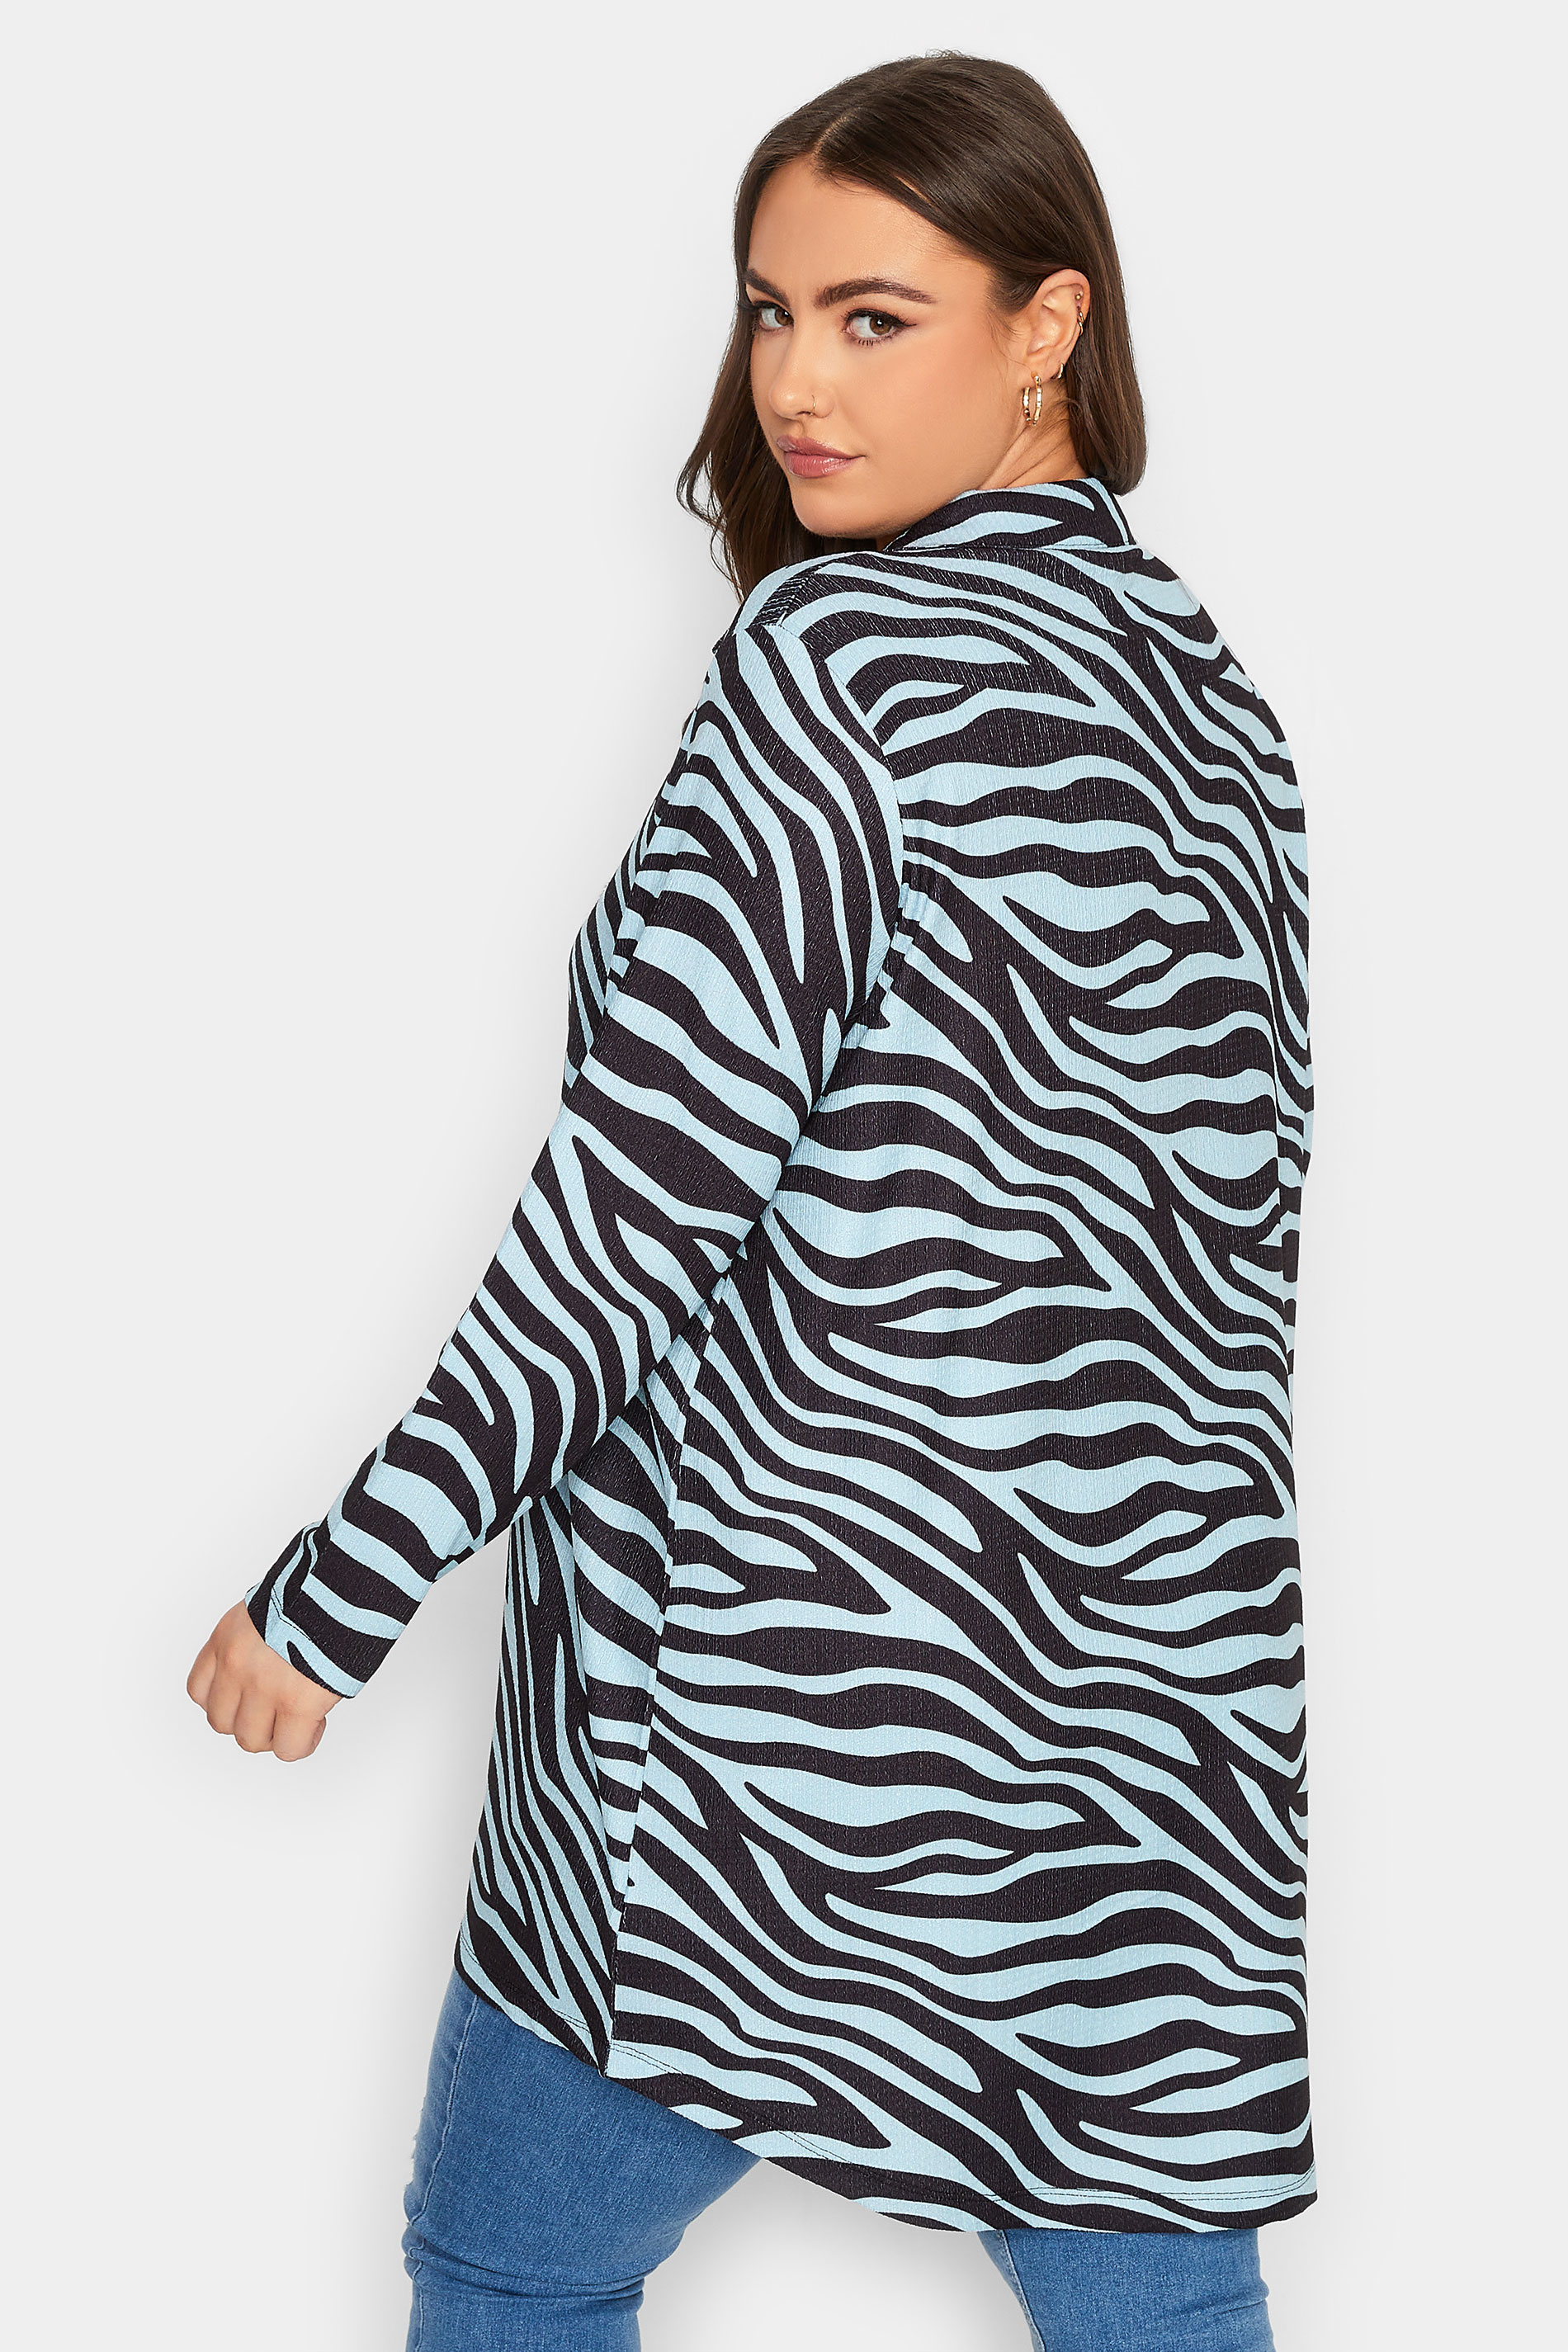 YOURS Plus Size Blue & Black Zebra Print Shirt | Yours Clothing 3